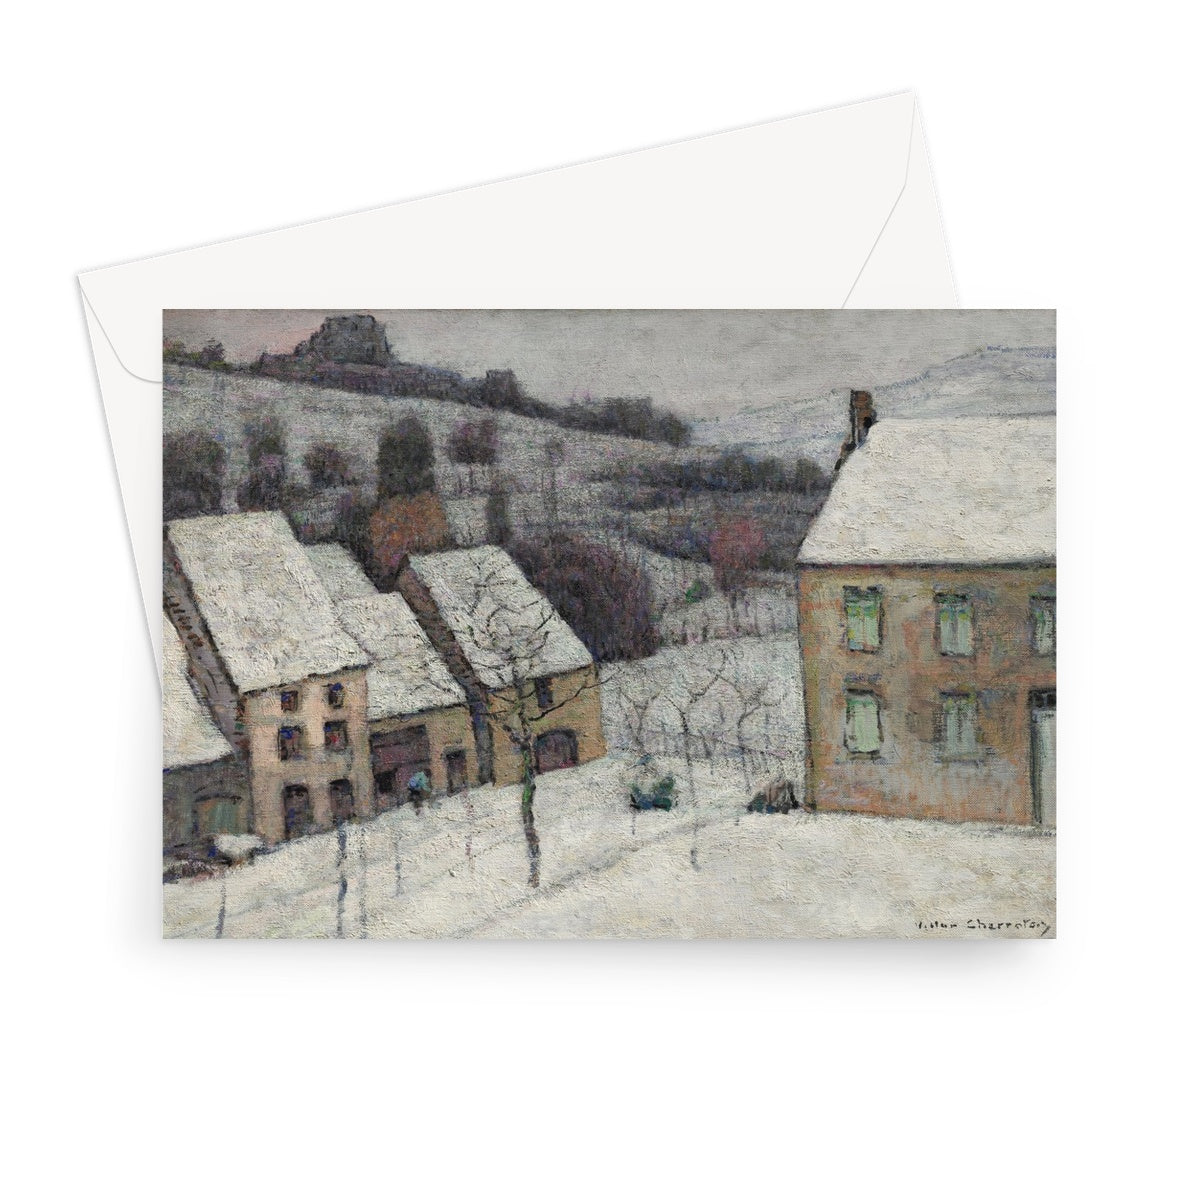 Murol in the Snow by Victor Charreton, c. 1920 - Greeting Card